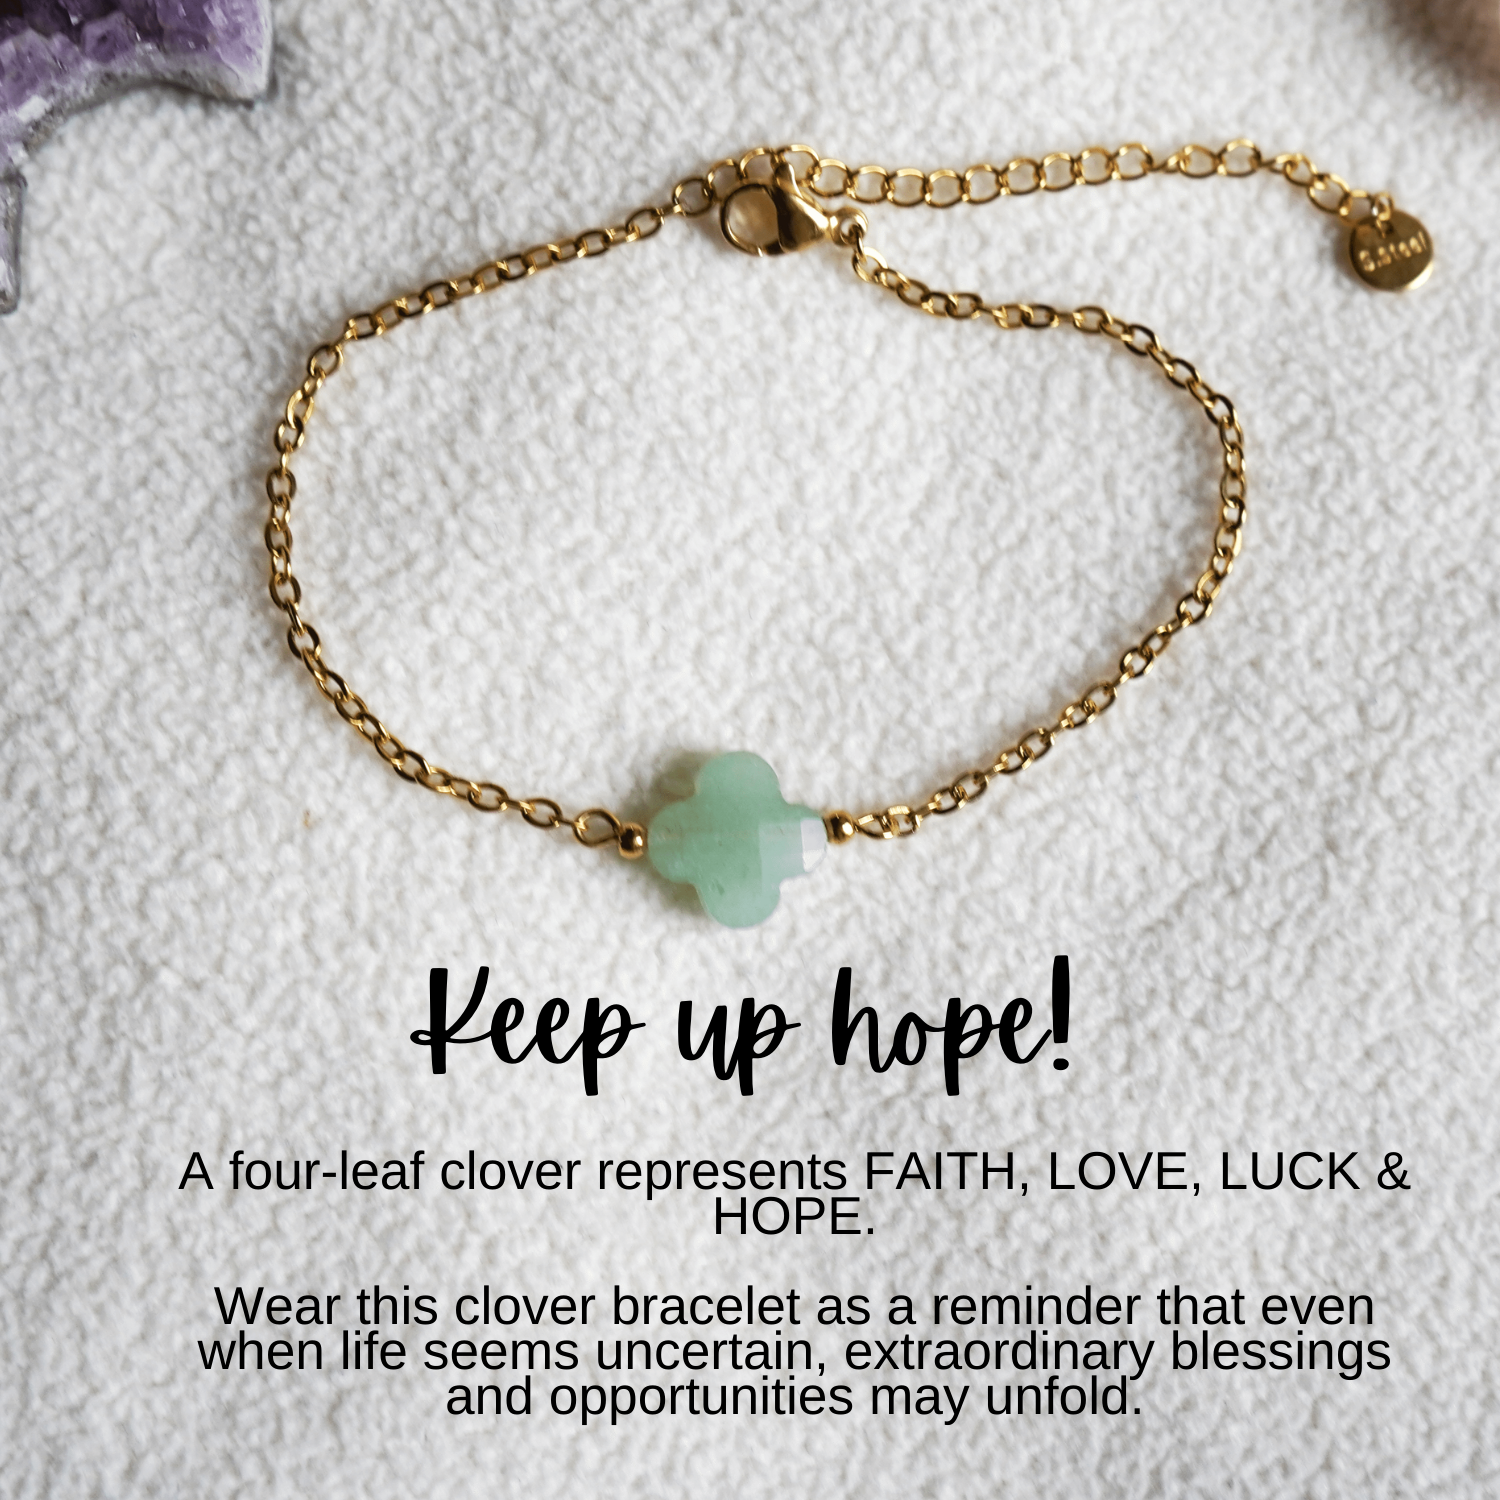 "Keep Up Hope" Green Aventurine Clover Bracelet